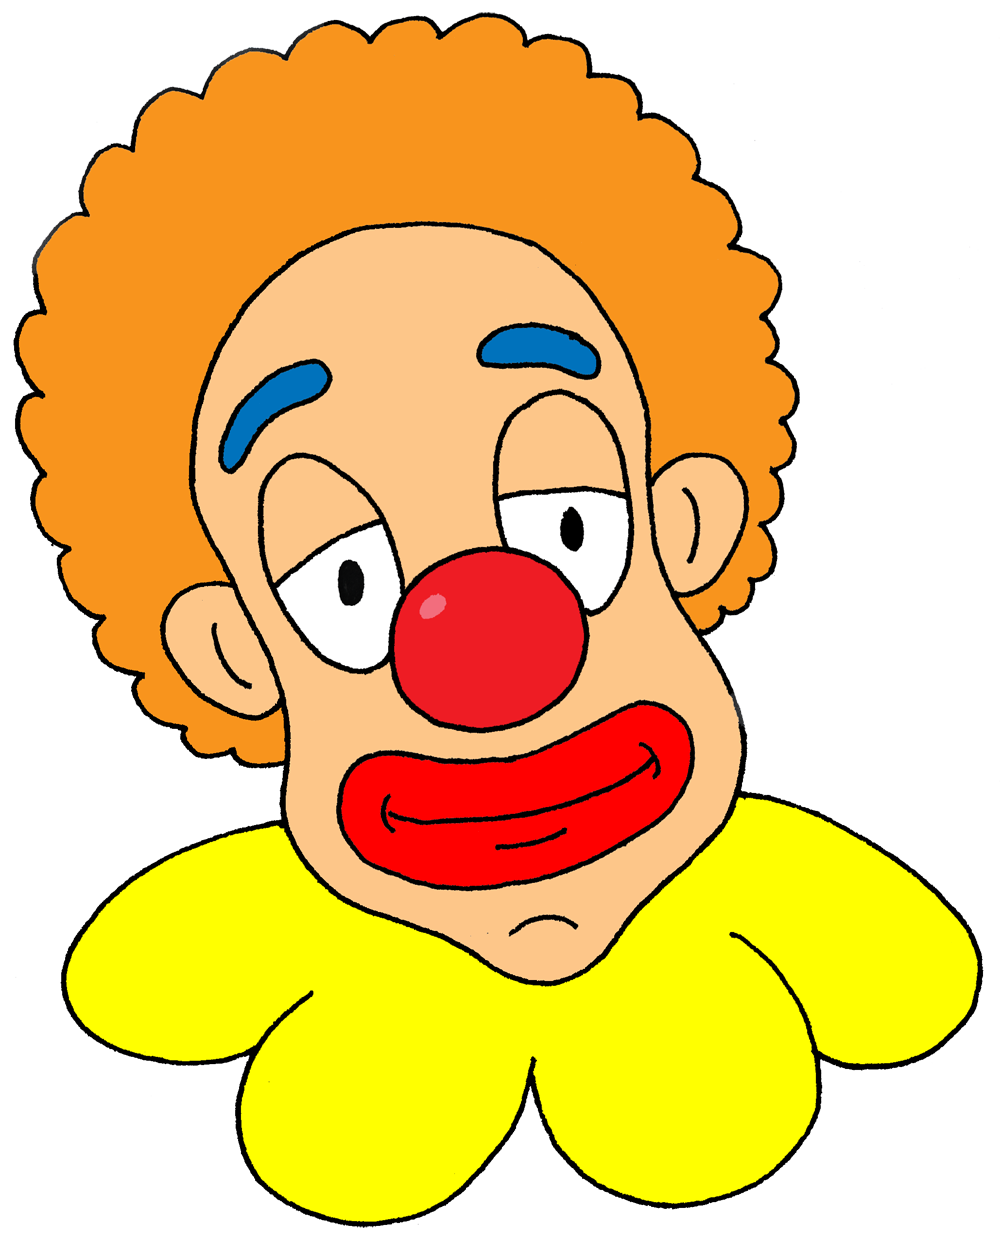 Image Of Clown Face 9 Clown 1 Clipart